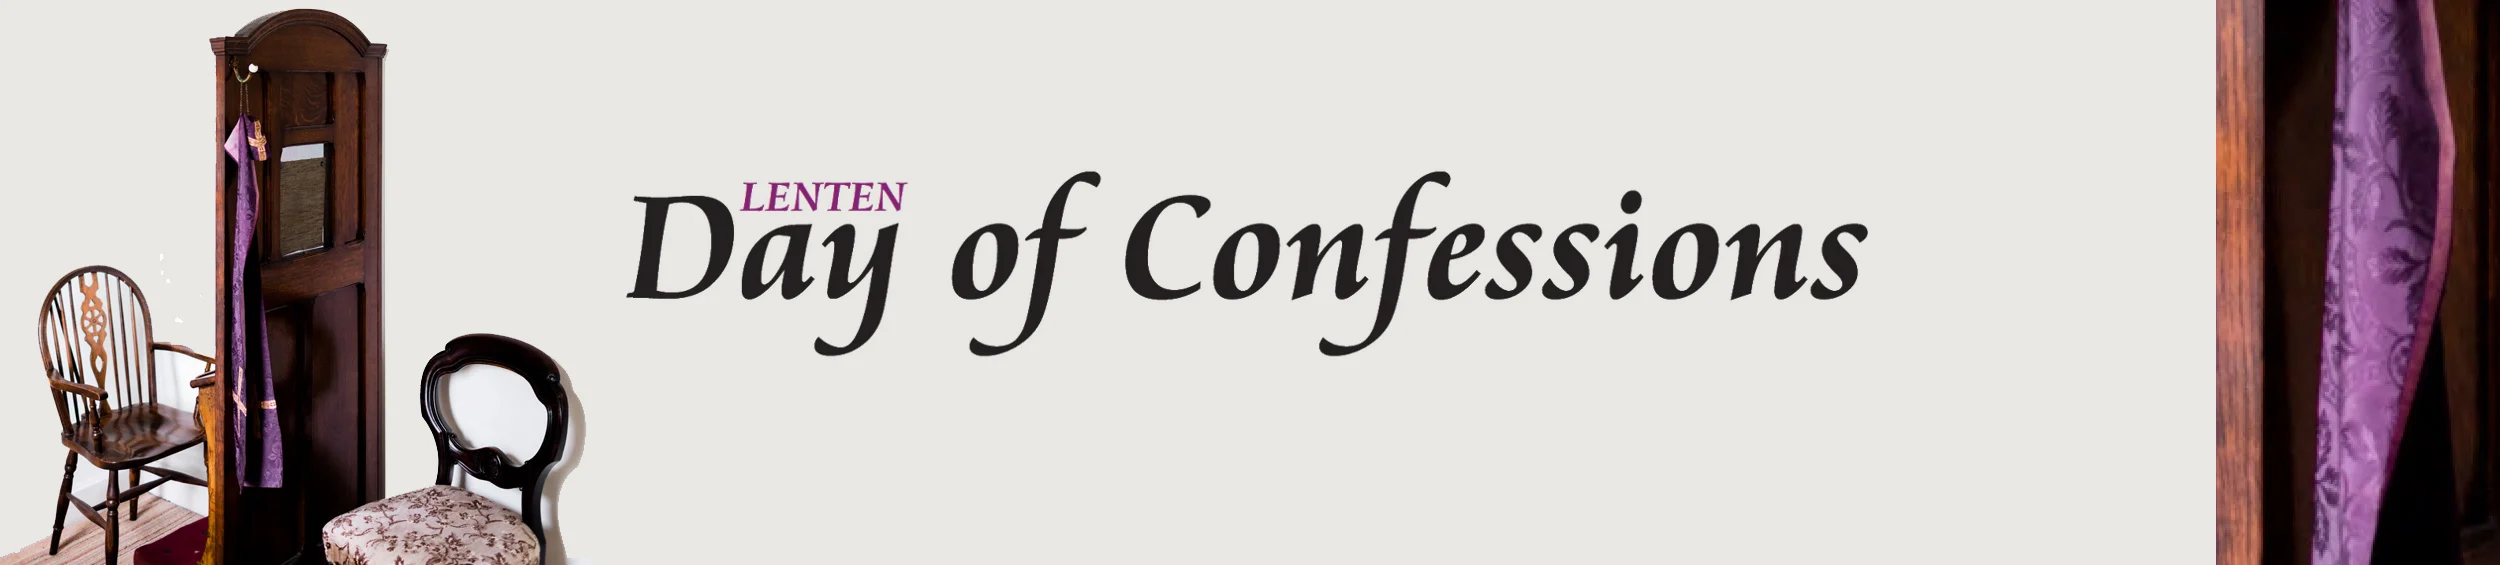 lenten day of confession-banner.jpg